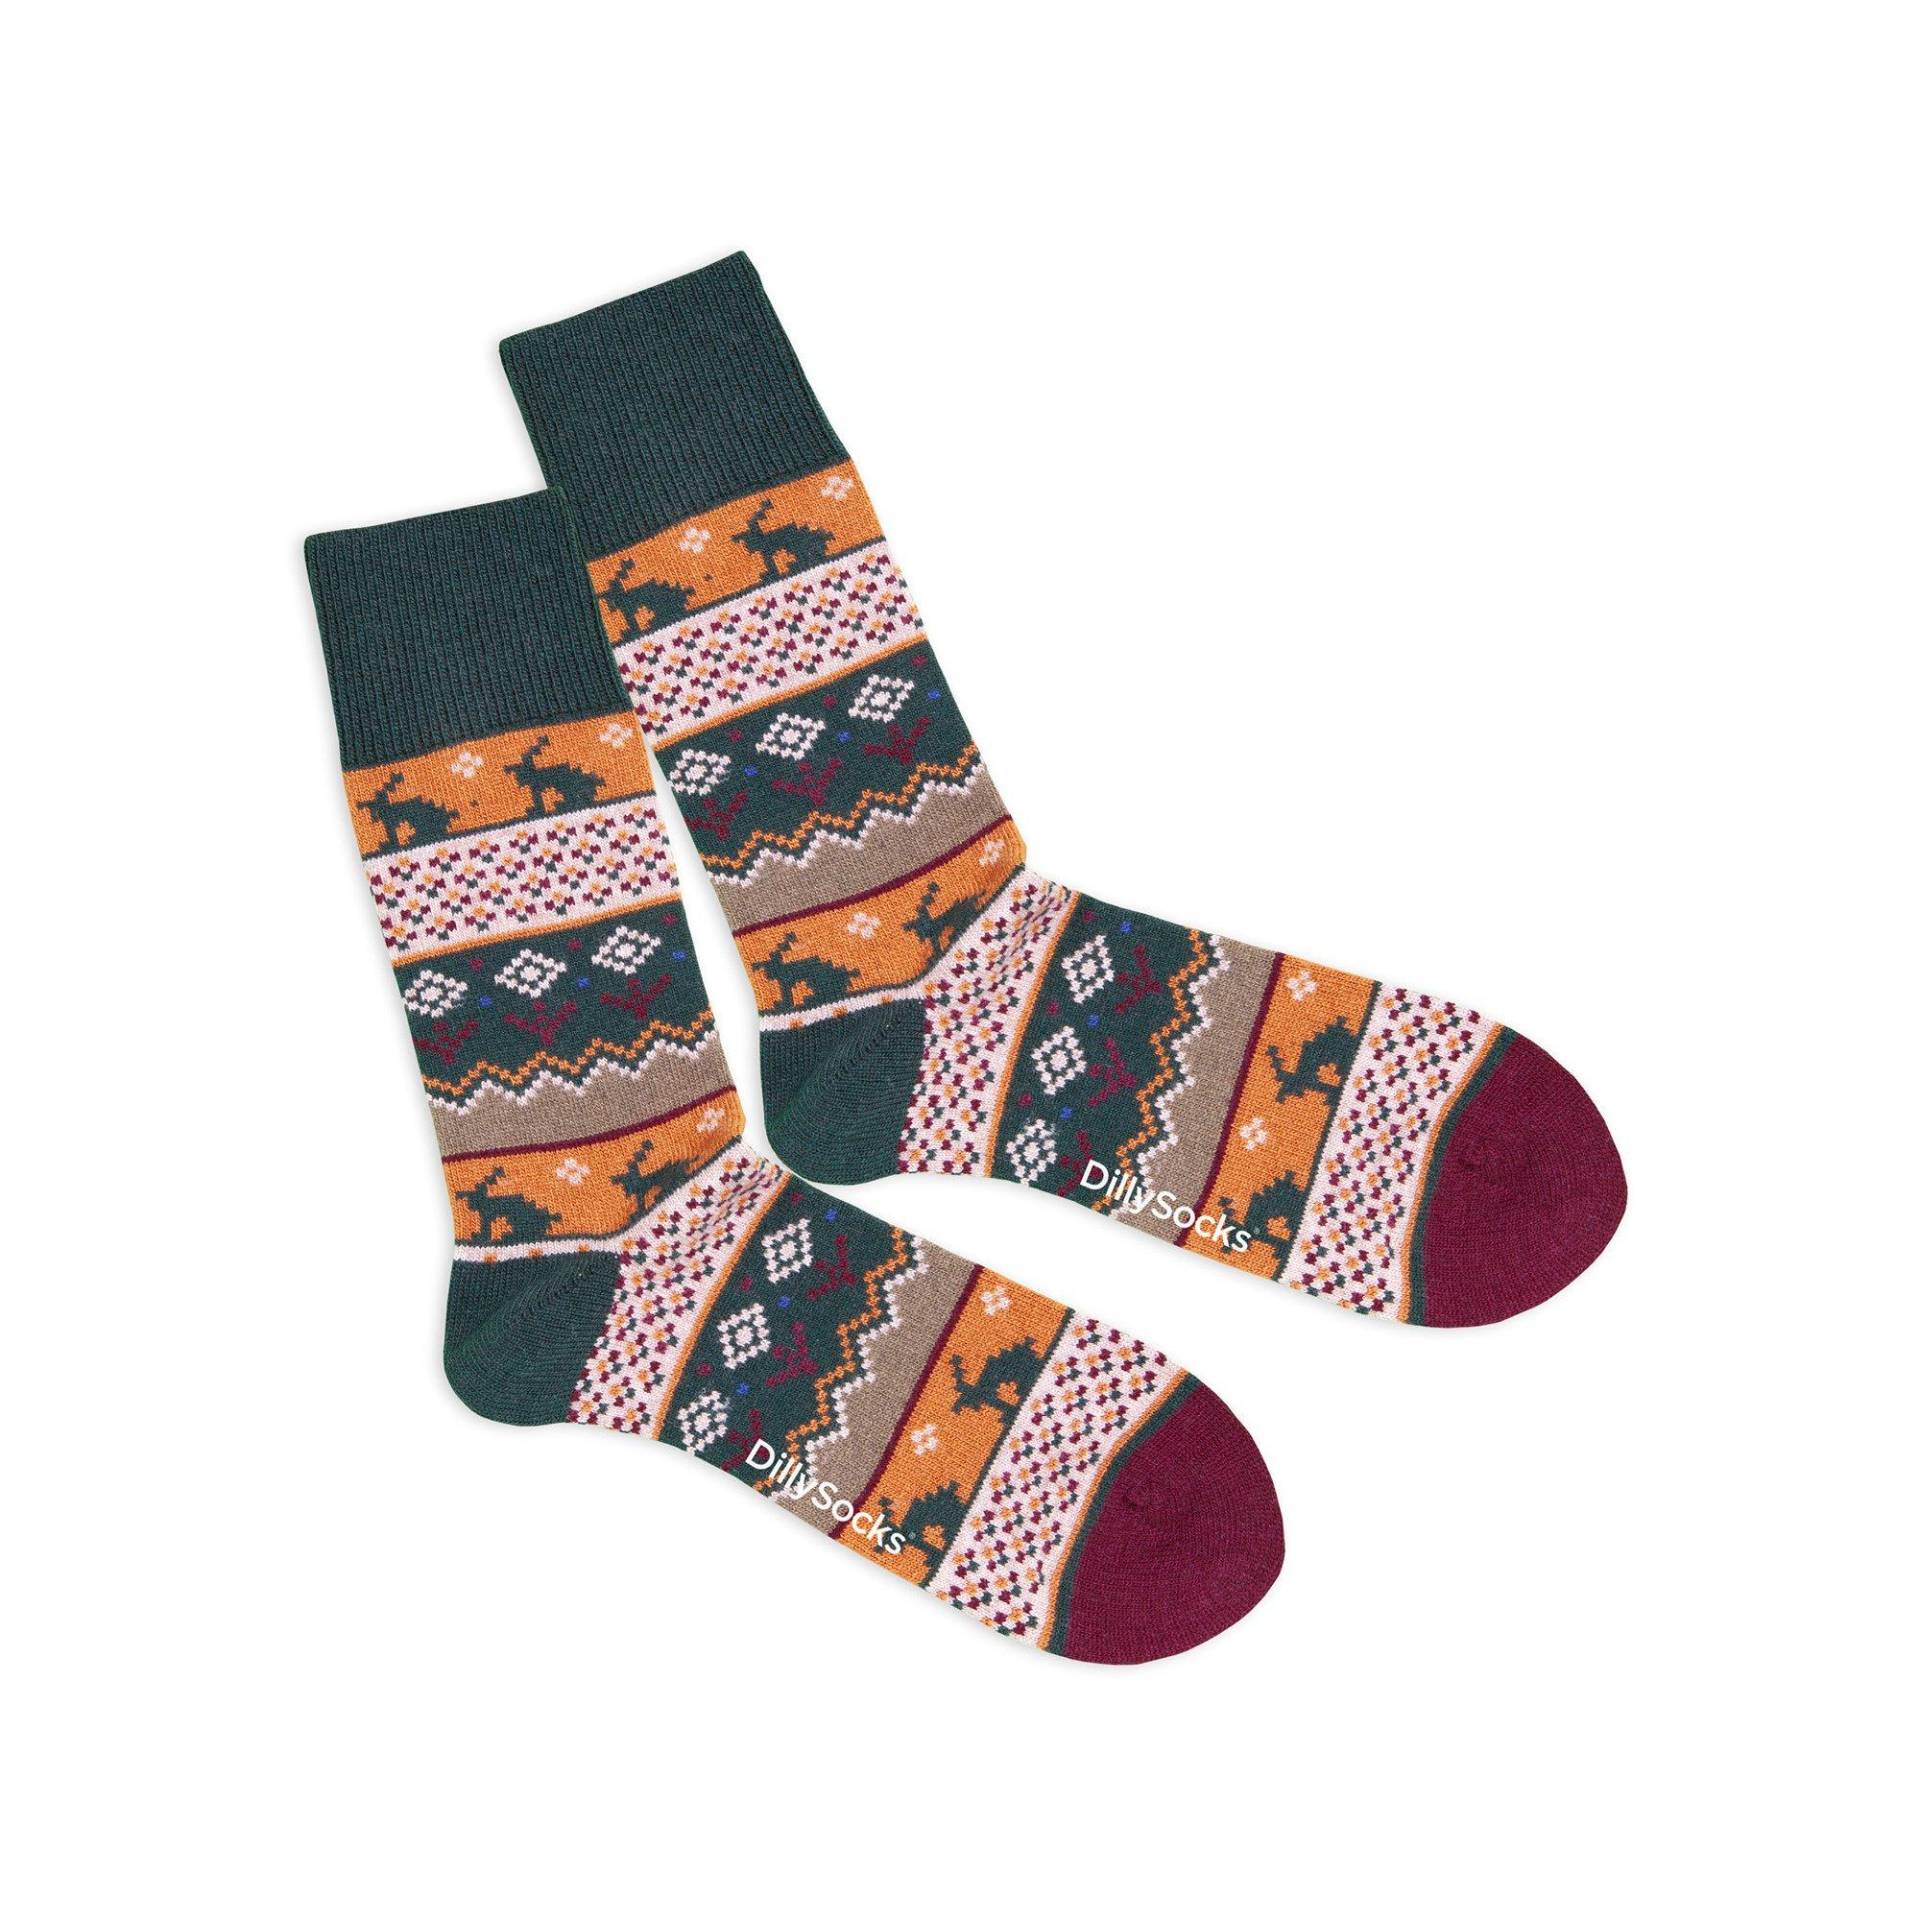 Socken Herren Multicolor 41/46 von DillySocks